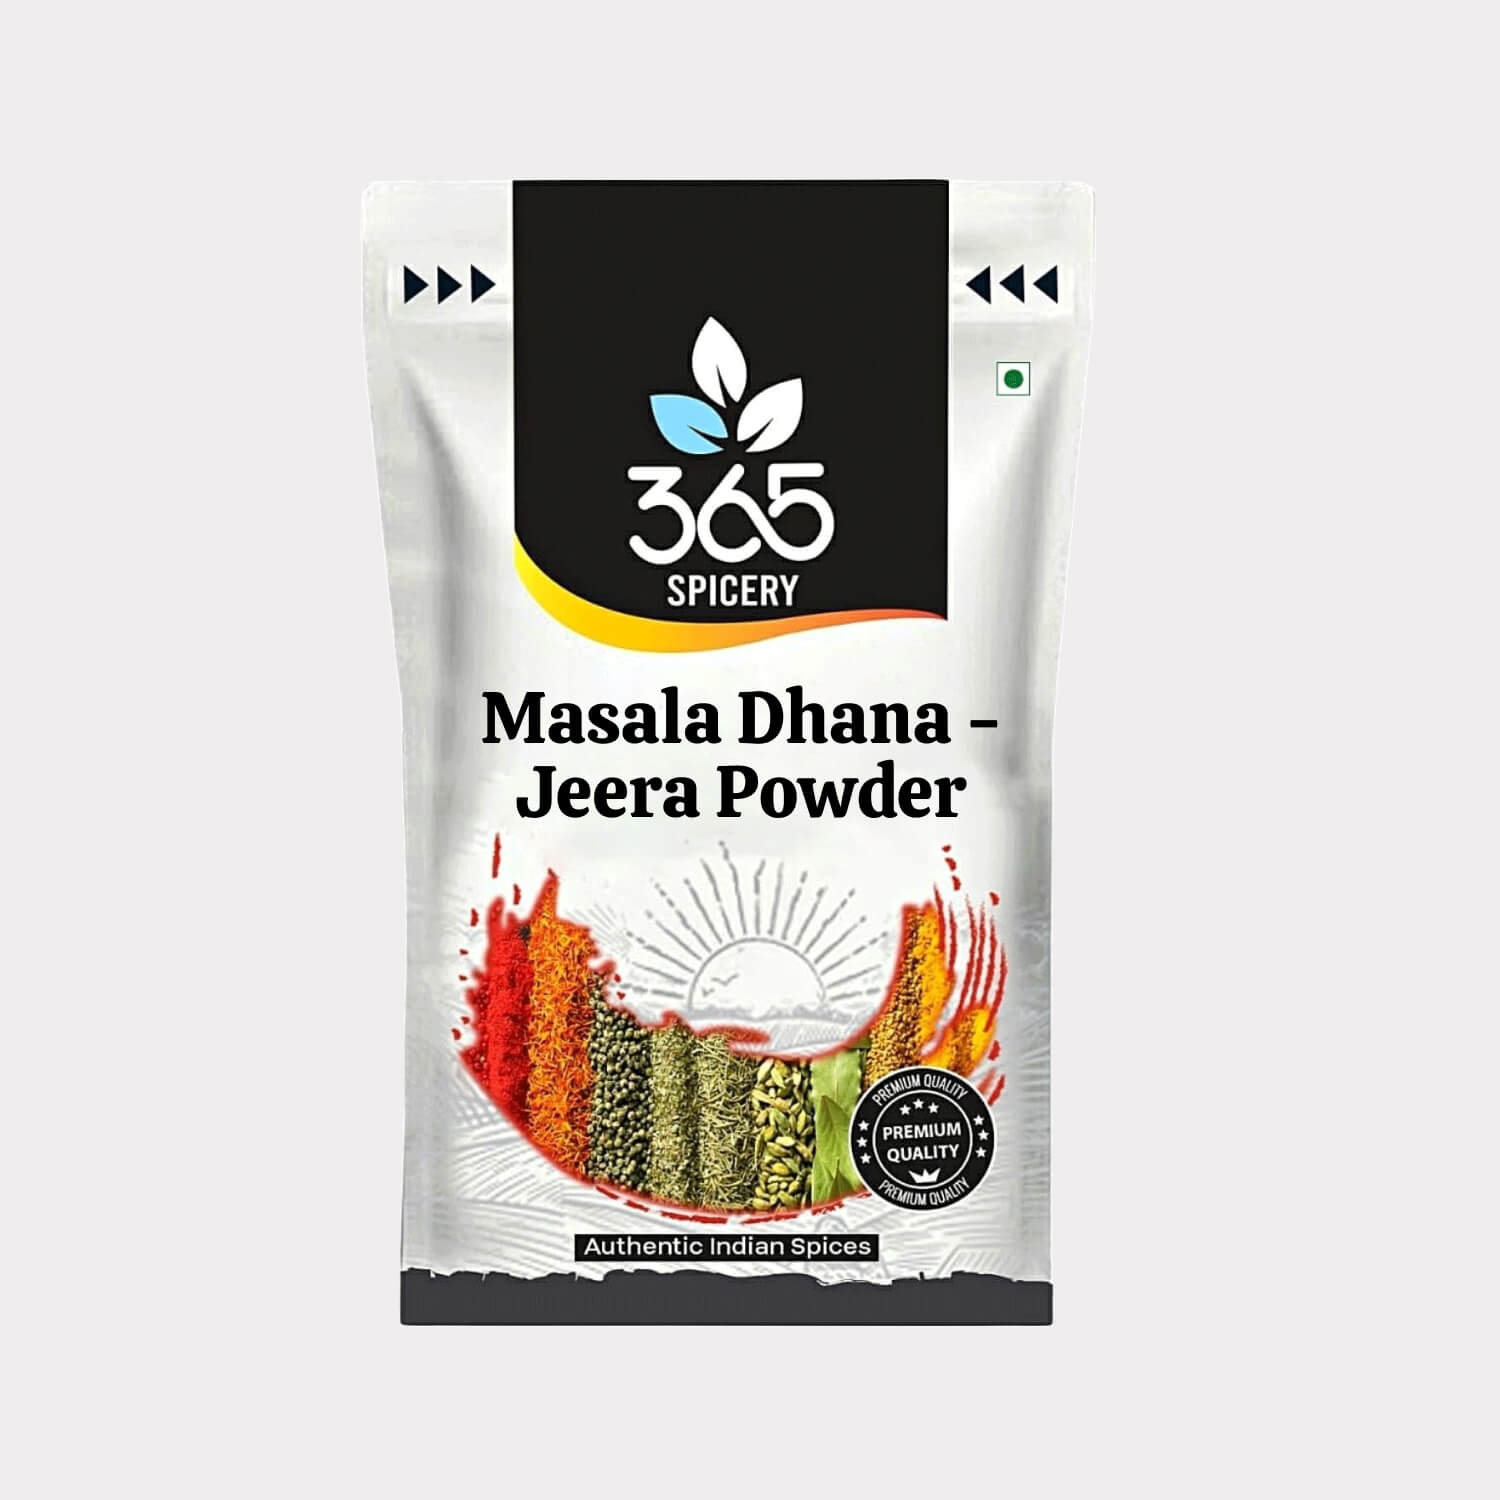 Masala Dhana - Jeera Powder